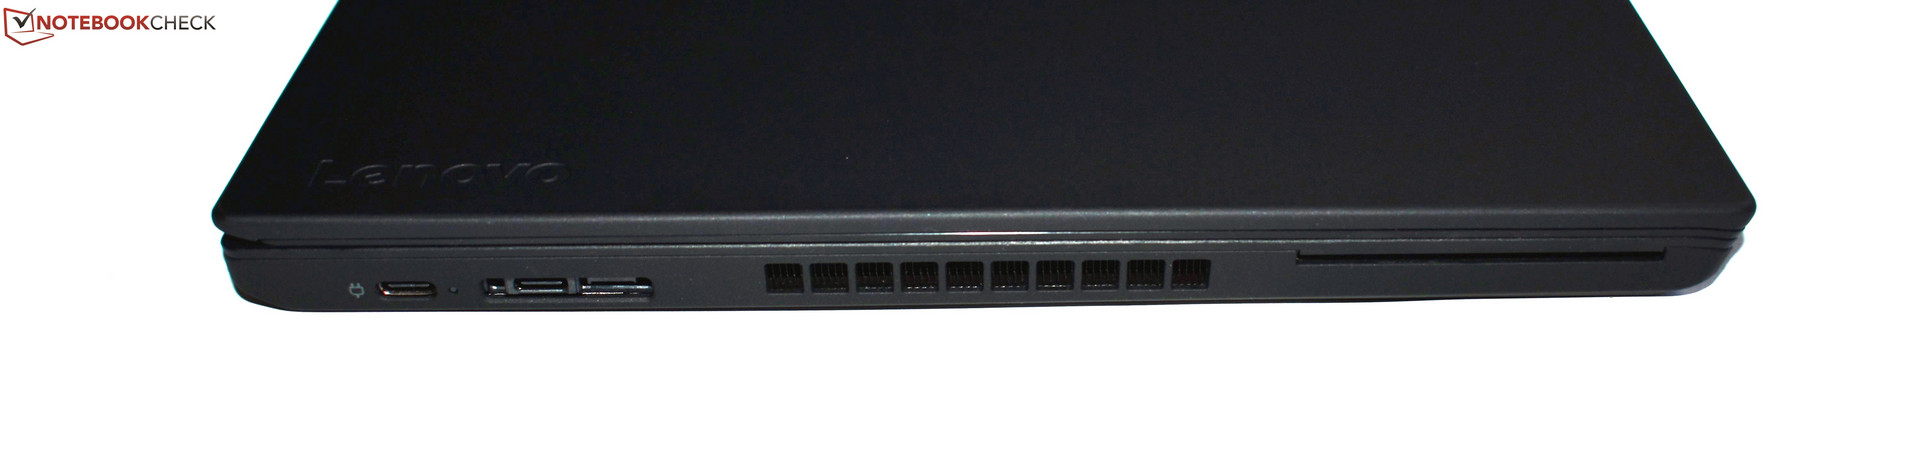 Lenovo ThinkPad A485 (Ryzen 5 Pro) Laptop Review - NotebookCheck 